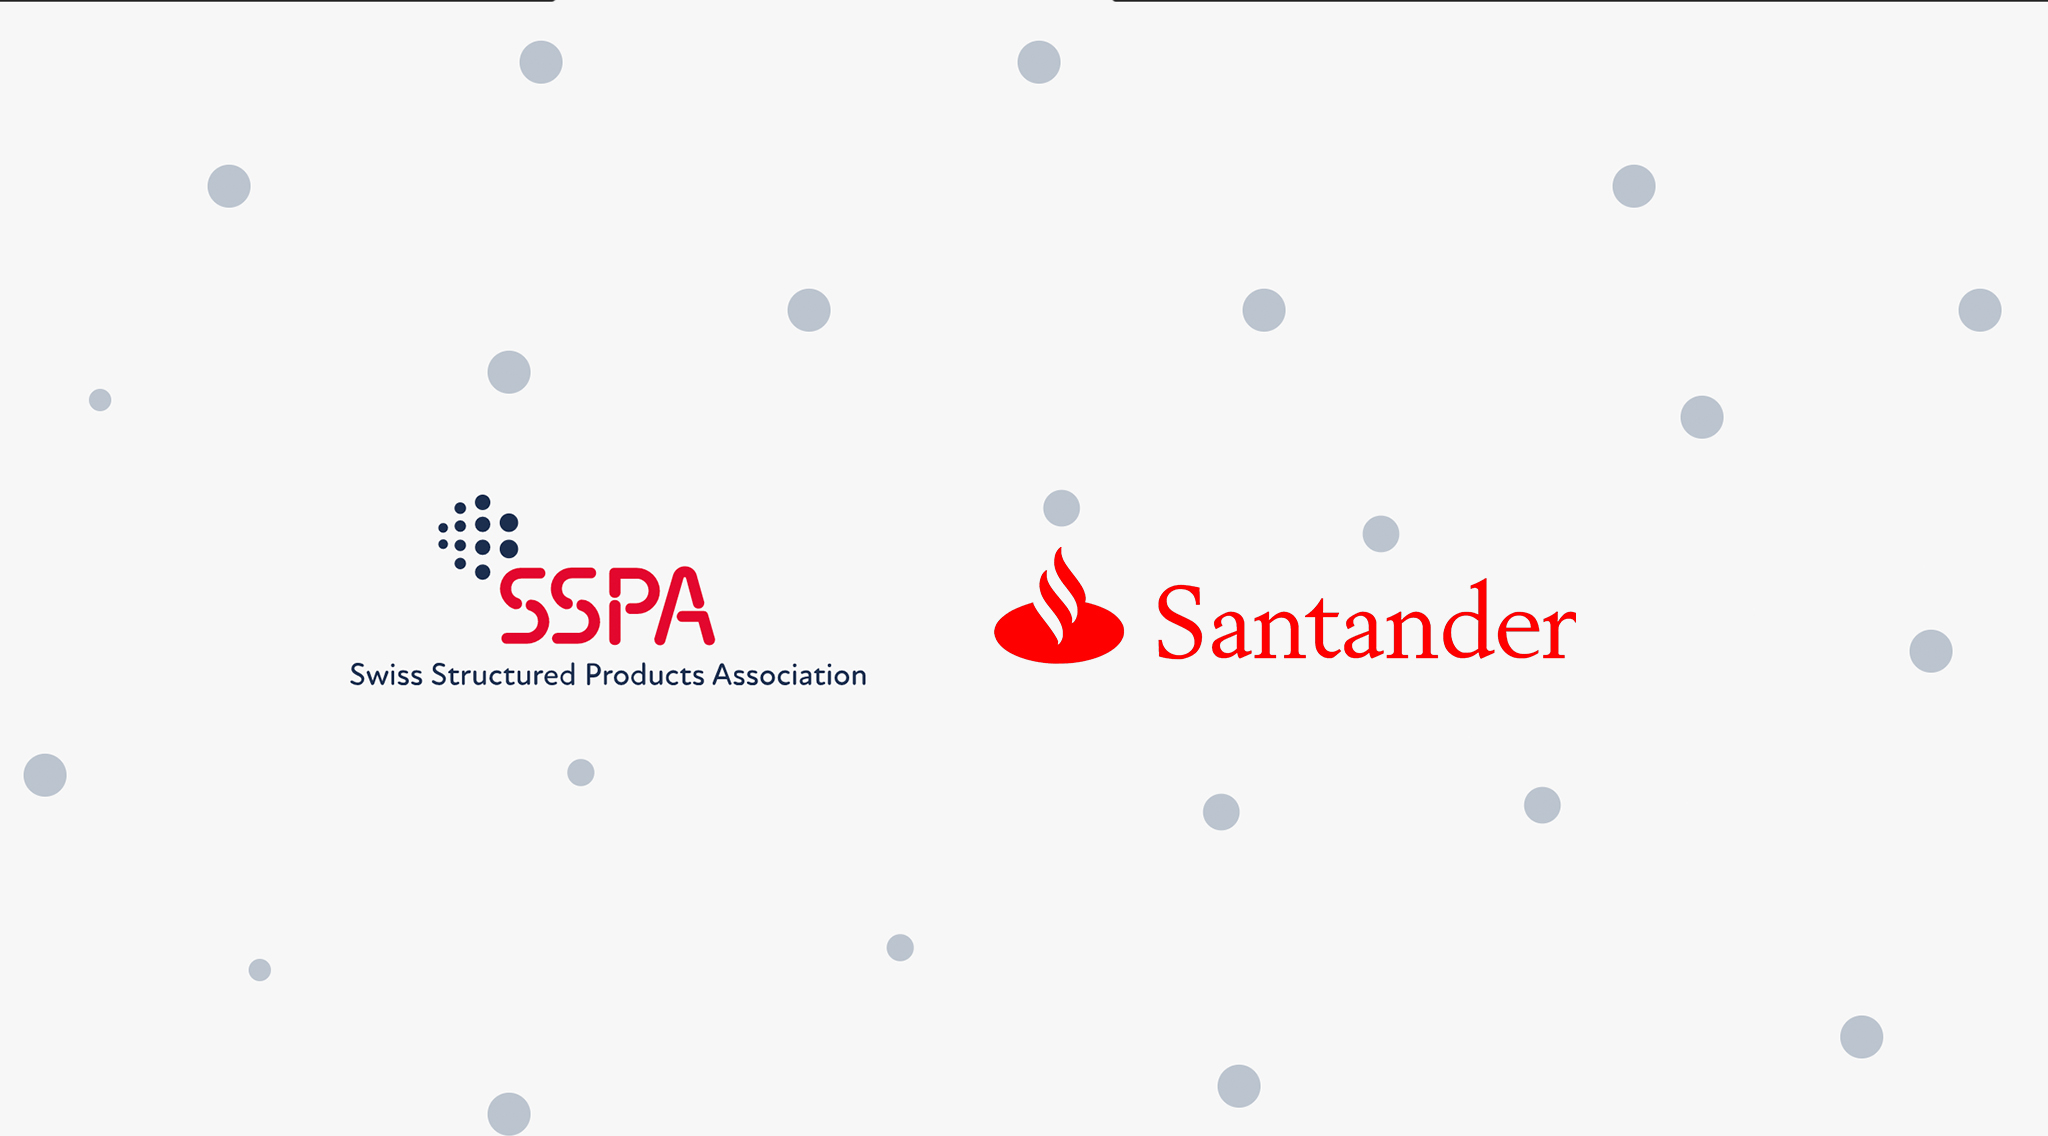 Santander Joins SSPA as a New Member